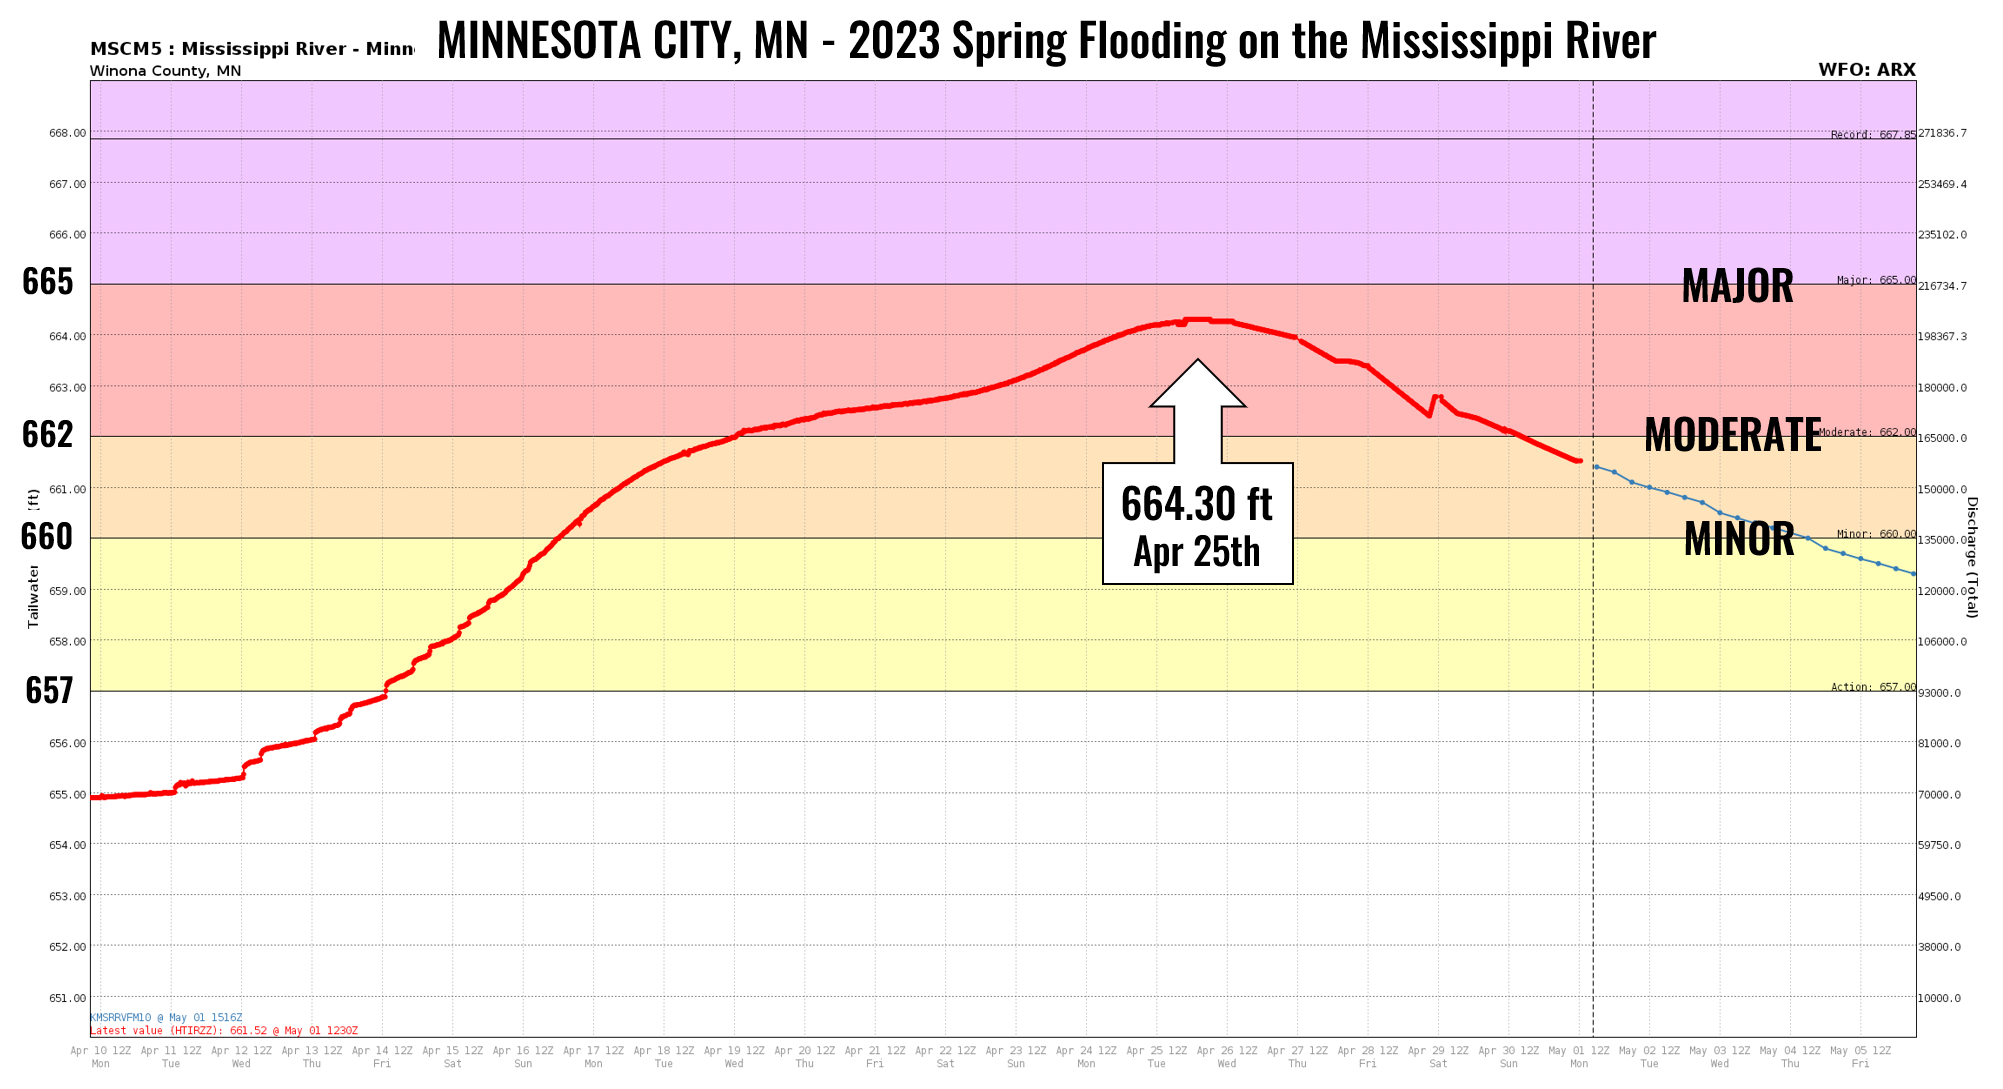 Minnesota City hydrograph 2023 flooding